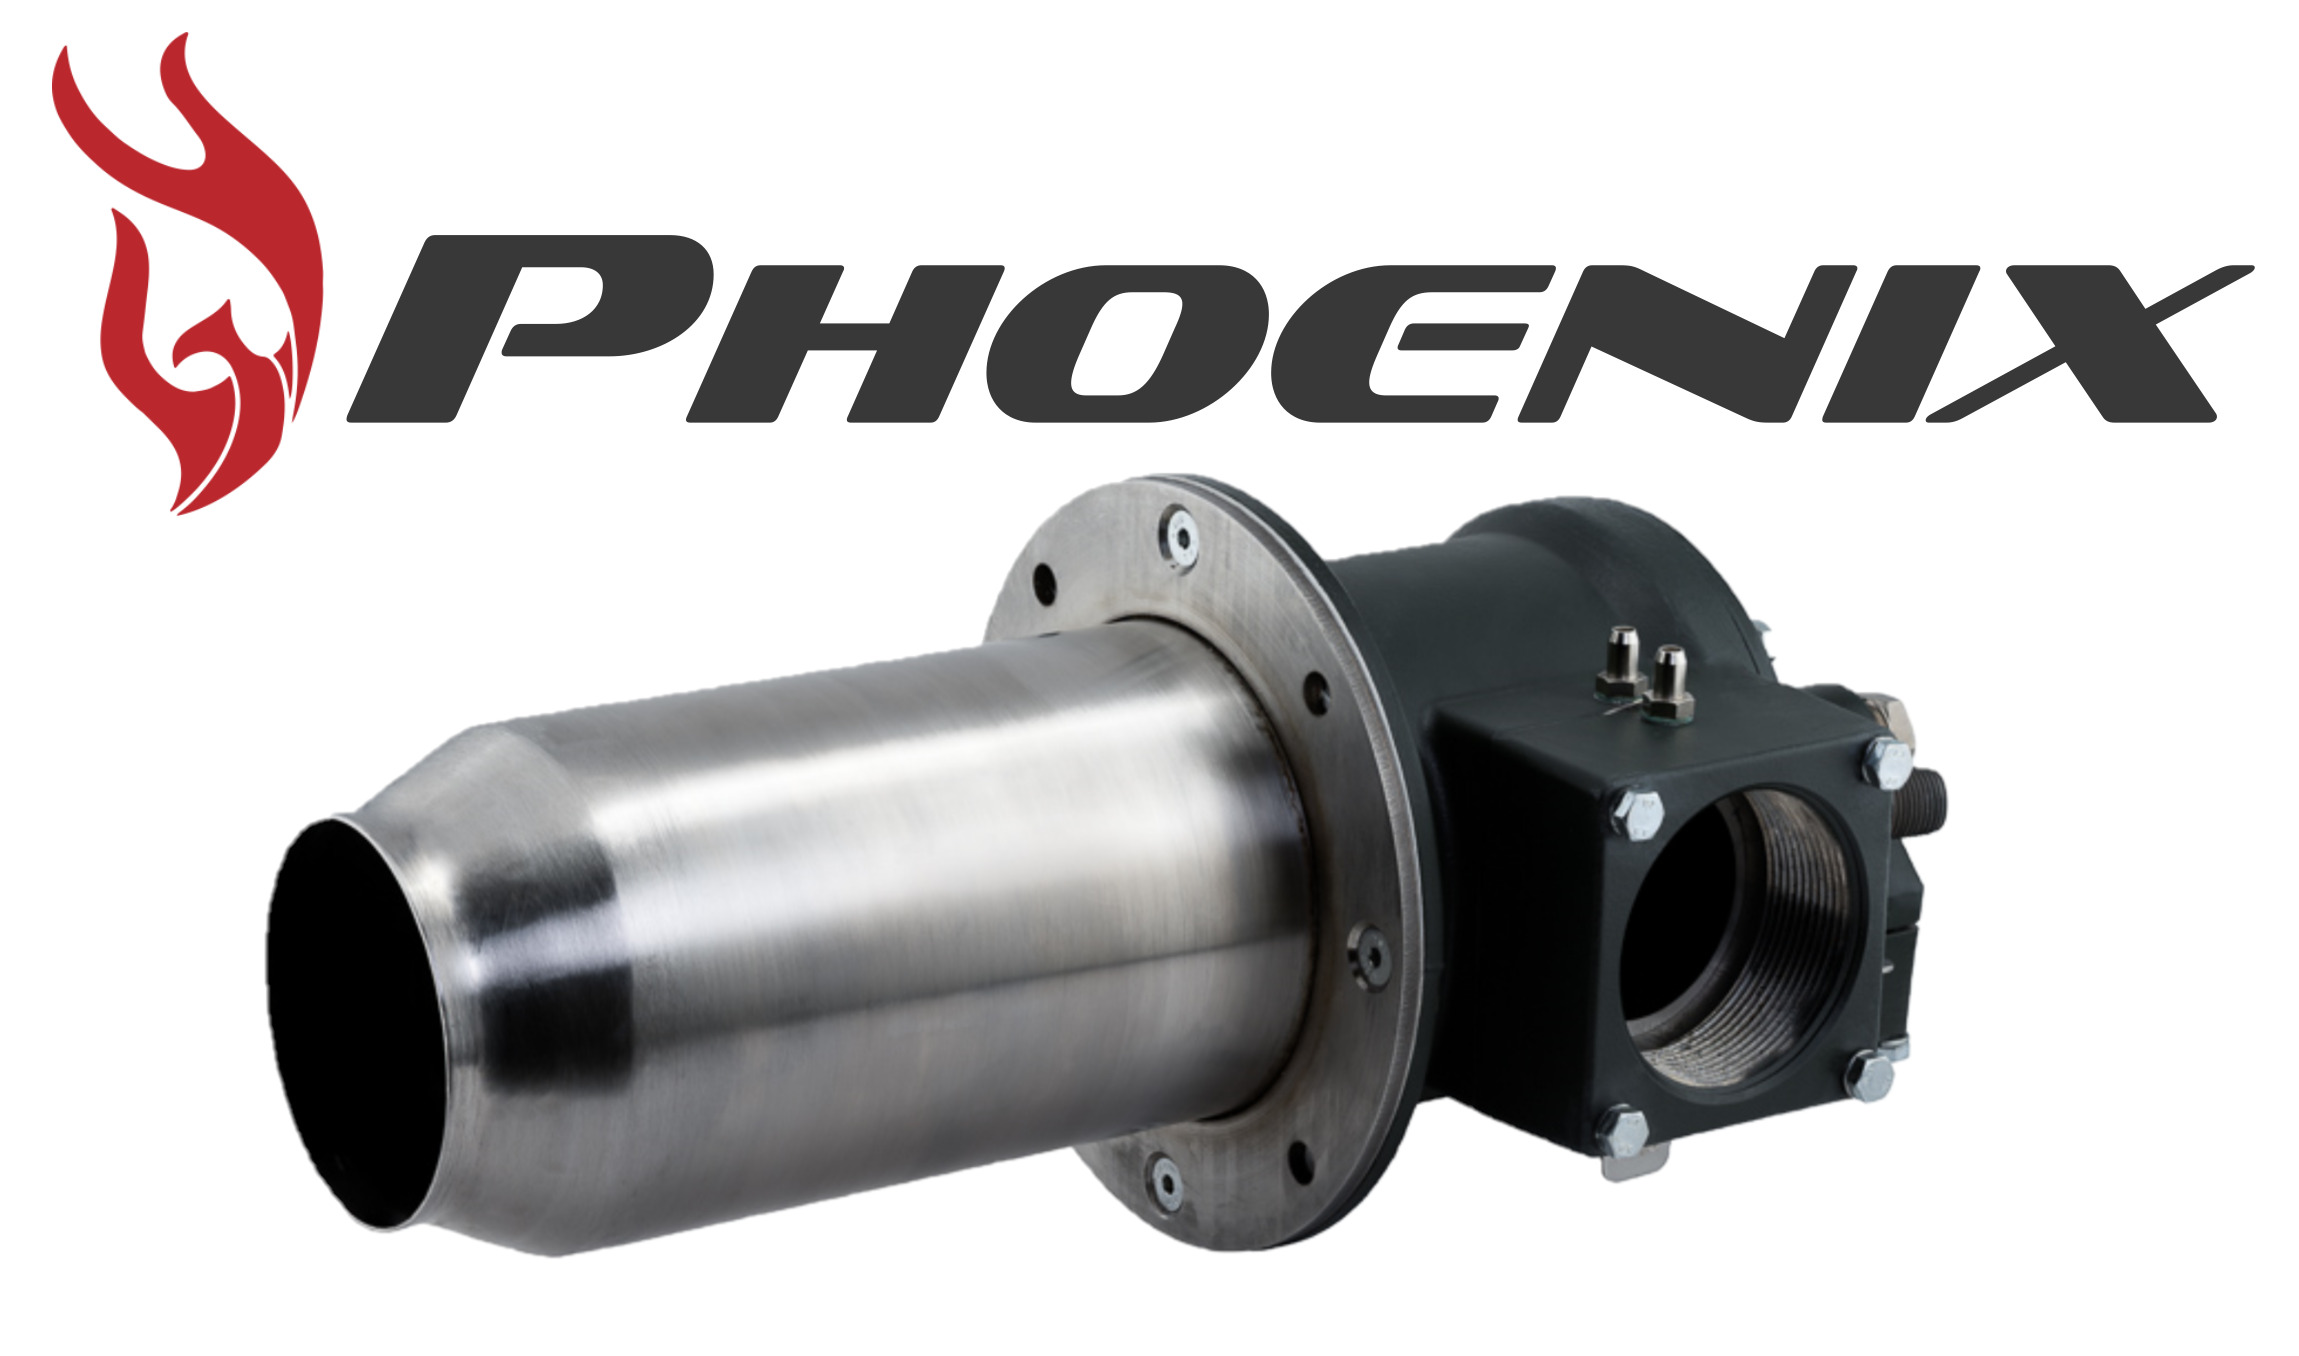 Phoenix Algas-SDI Hot Product